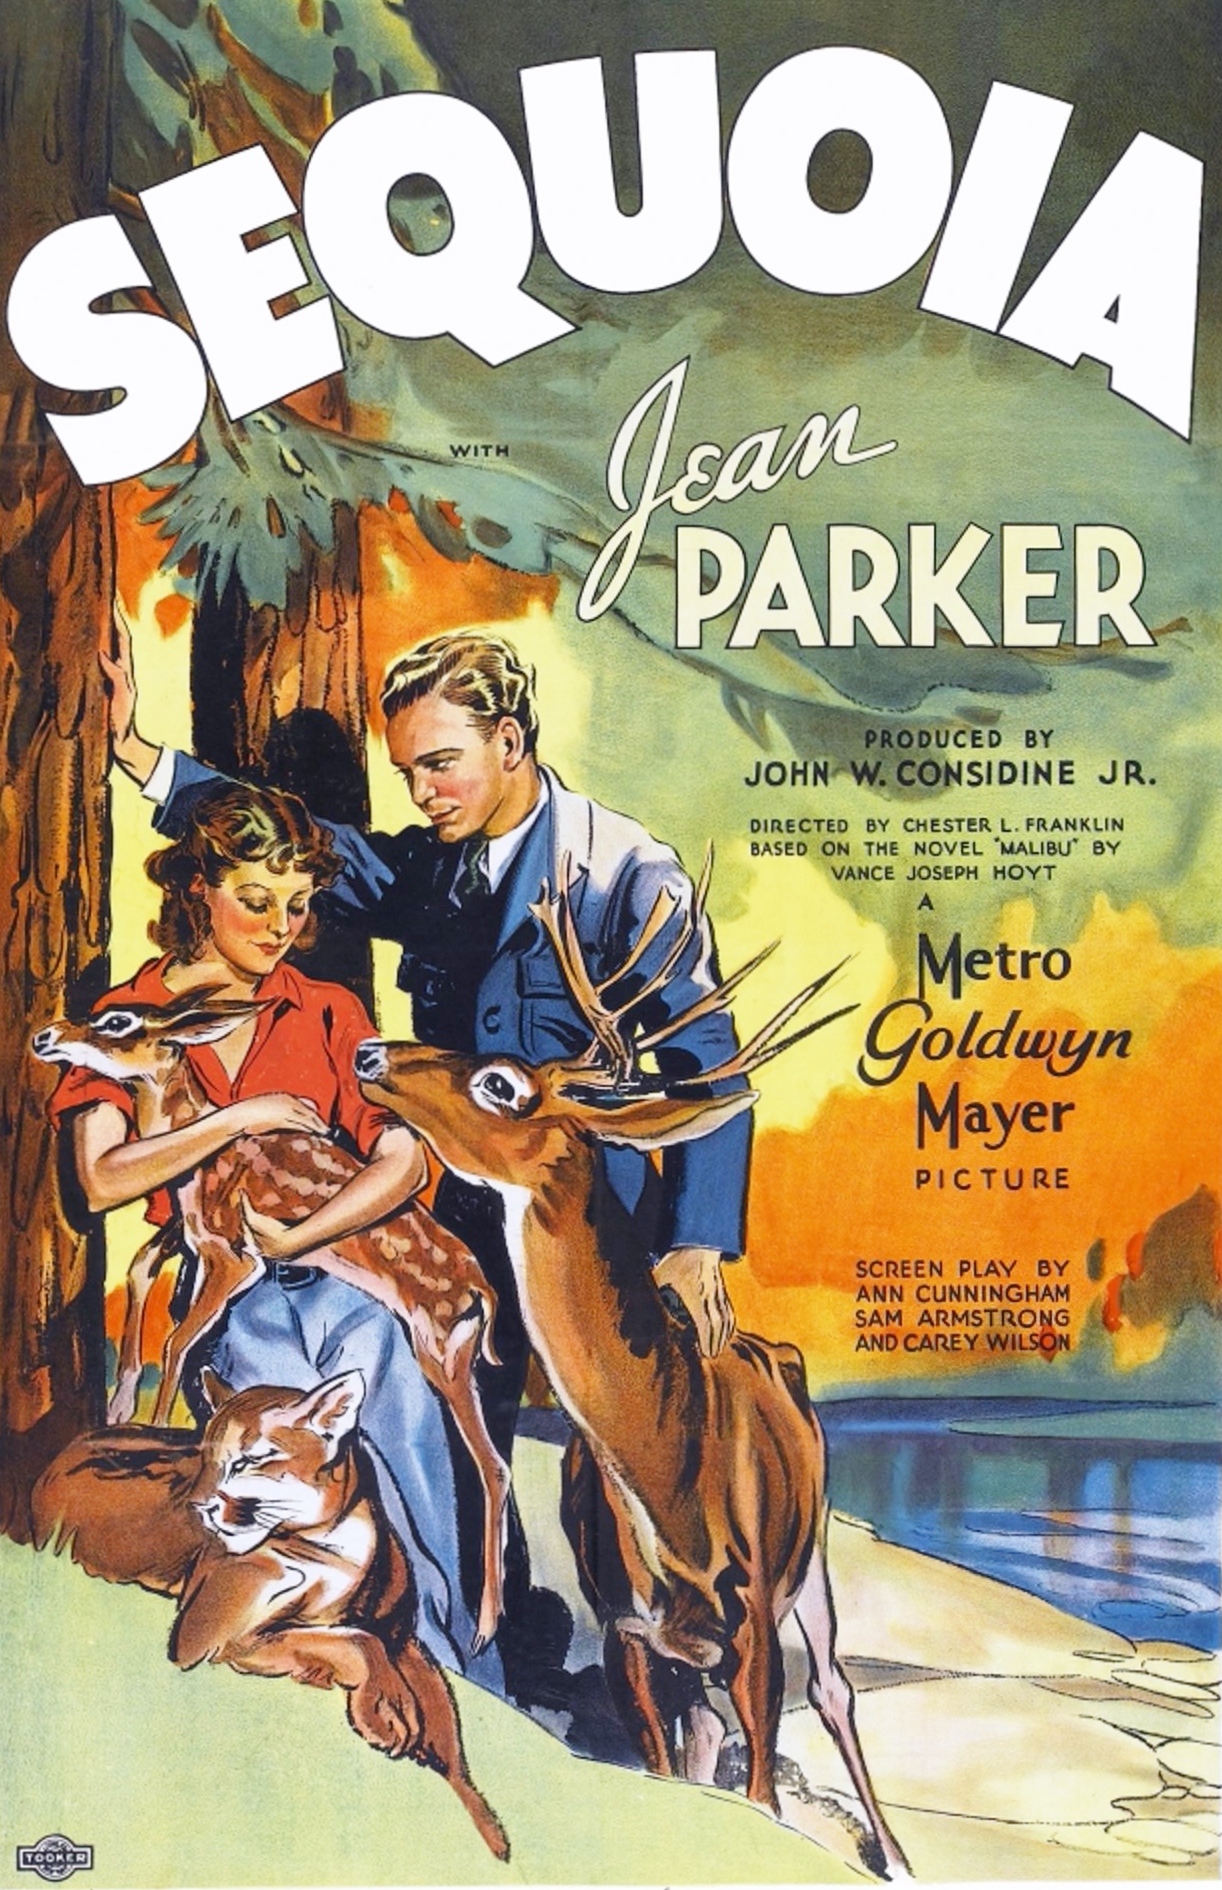 Sequoia (1934) starring Jean Parker on DVD on DVD